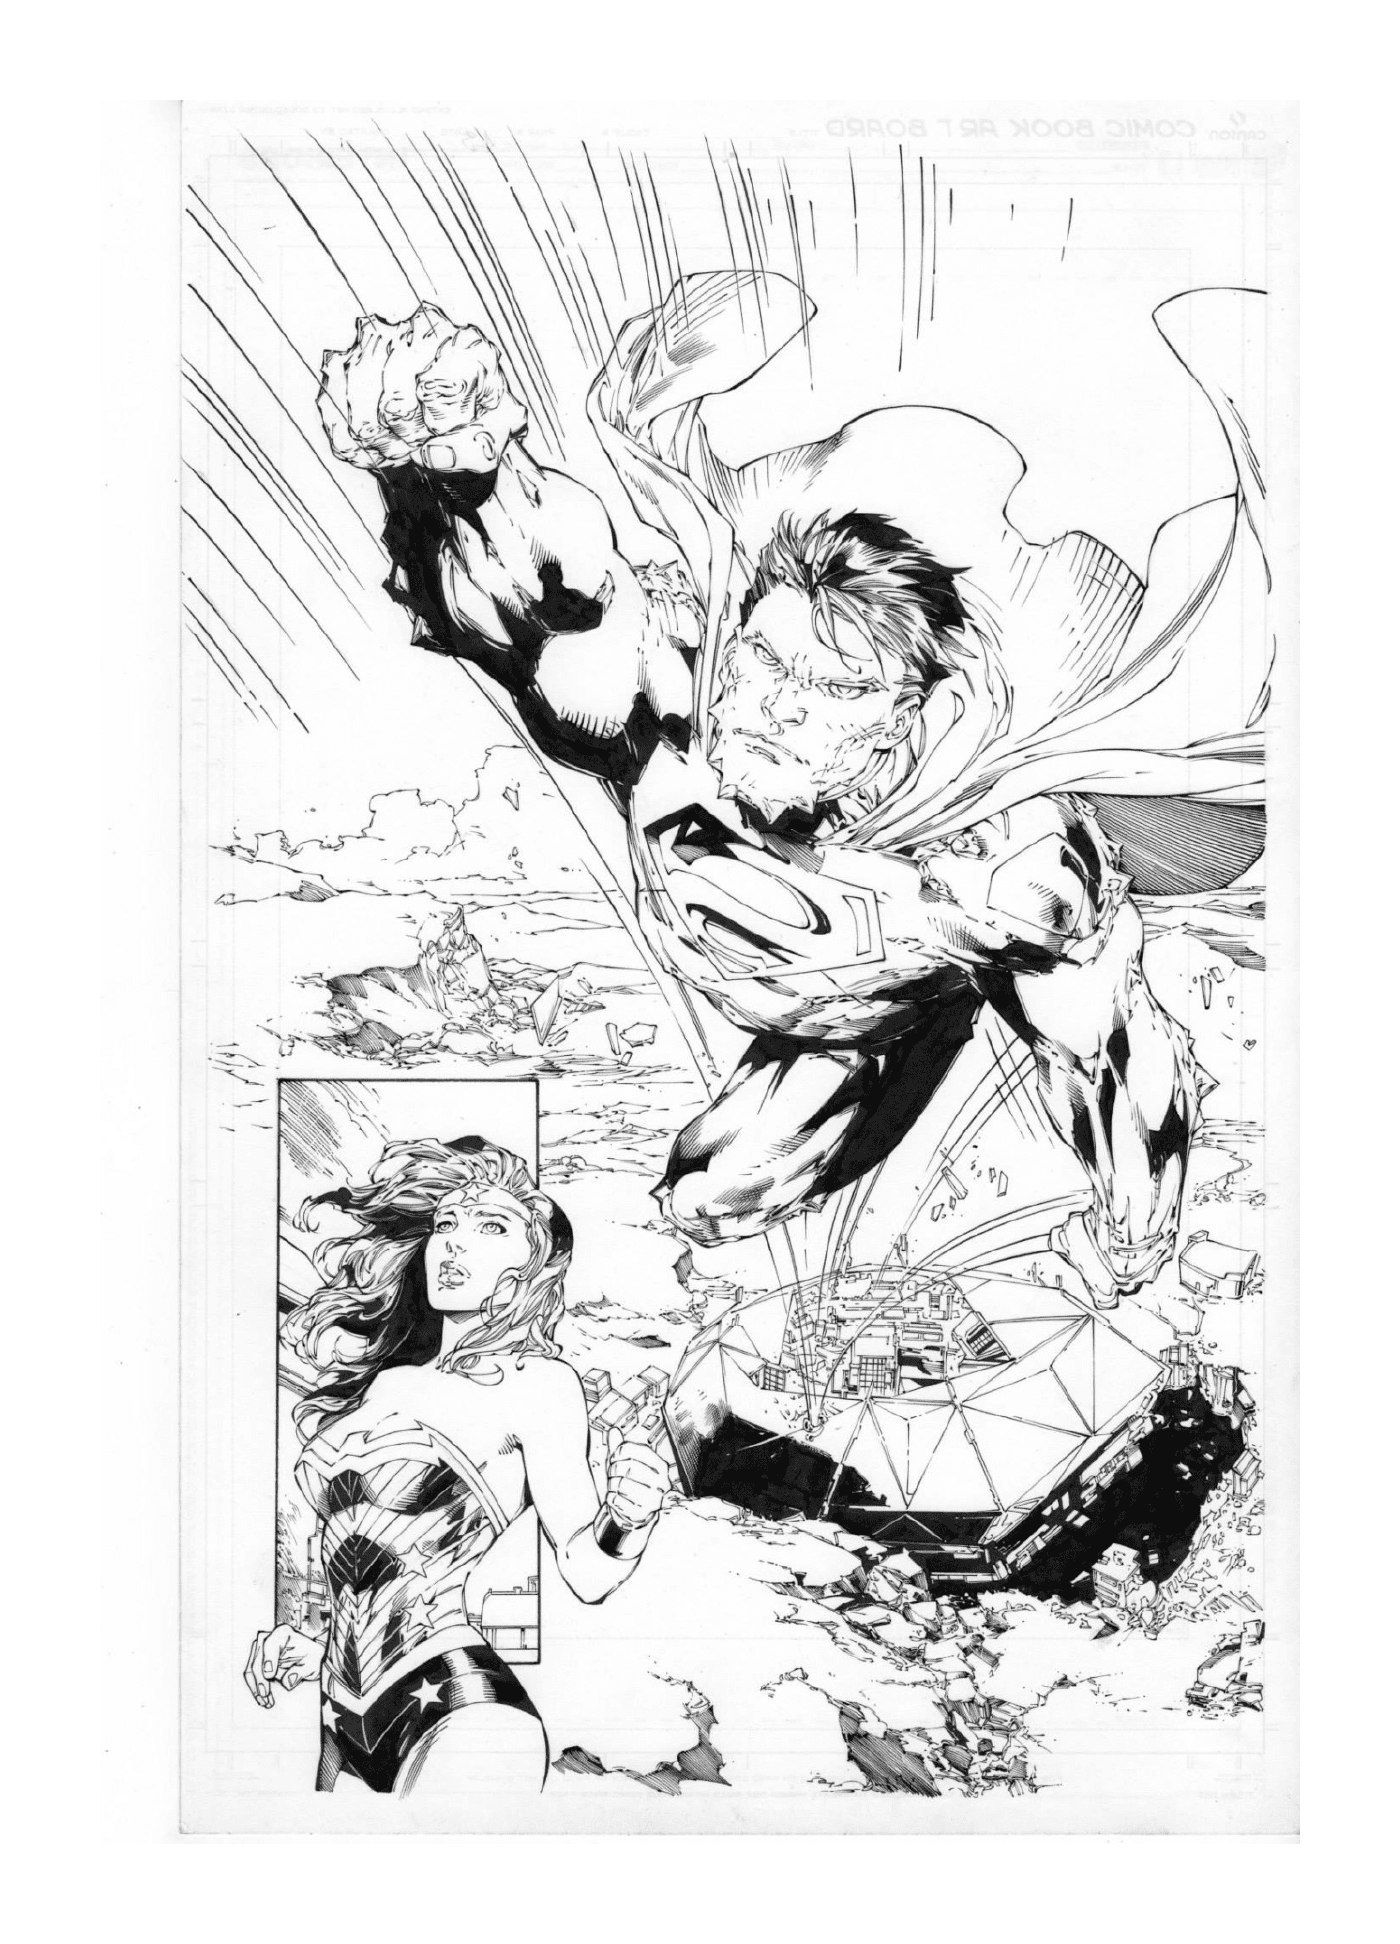  Superman si dirige verso Wonder Woman 